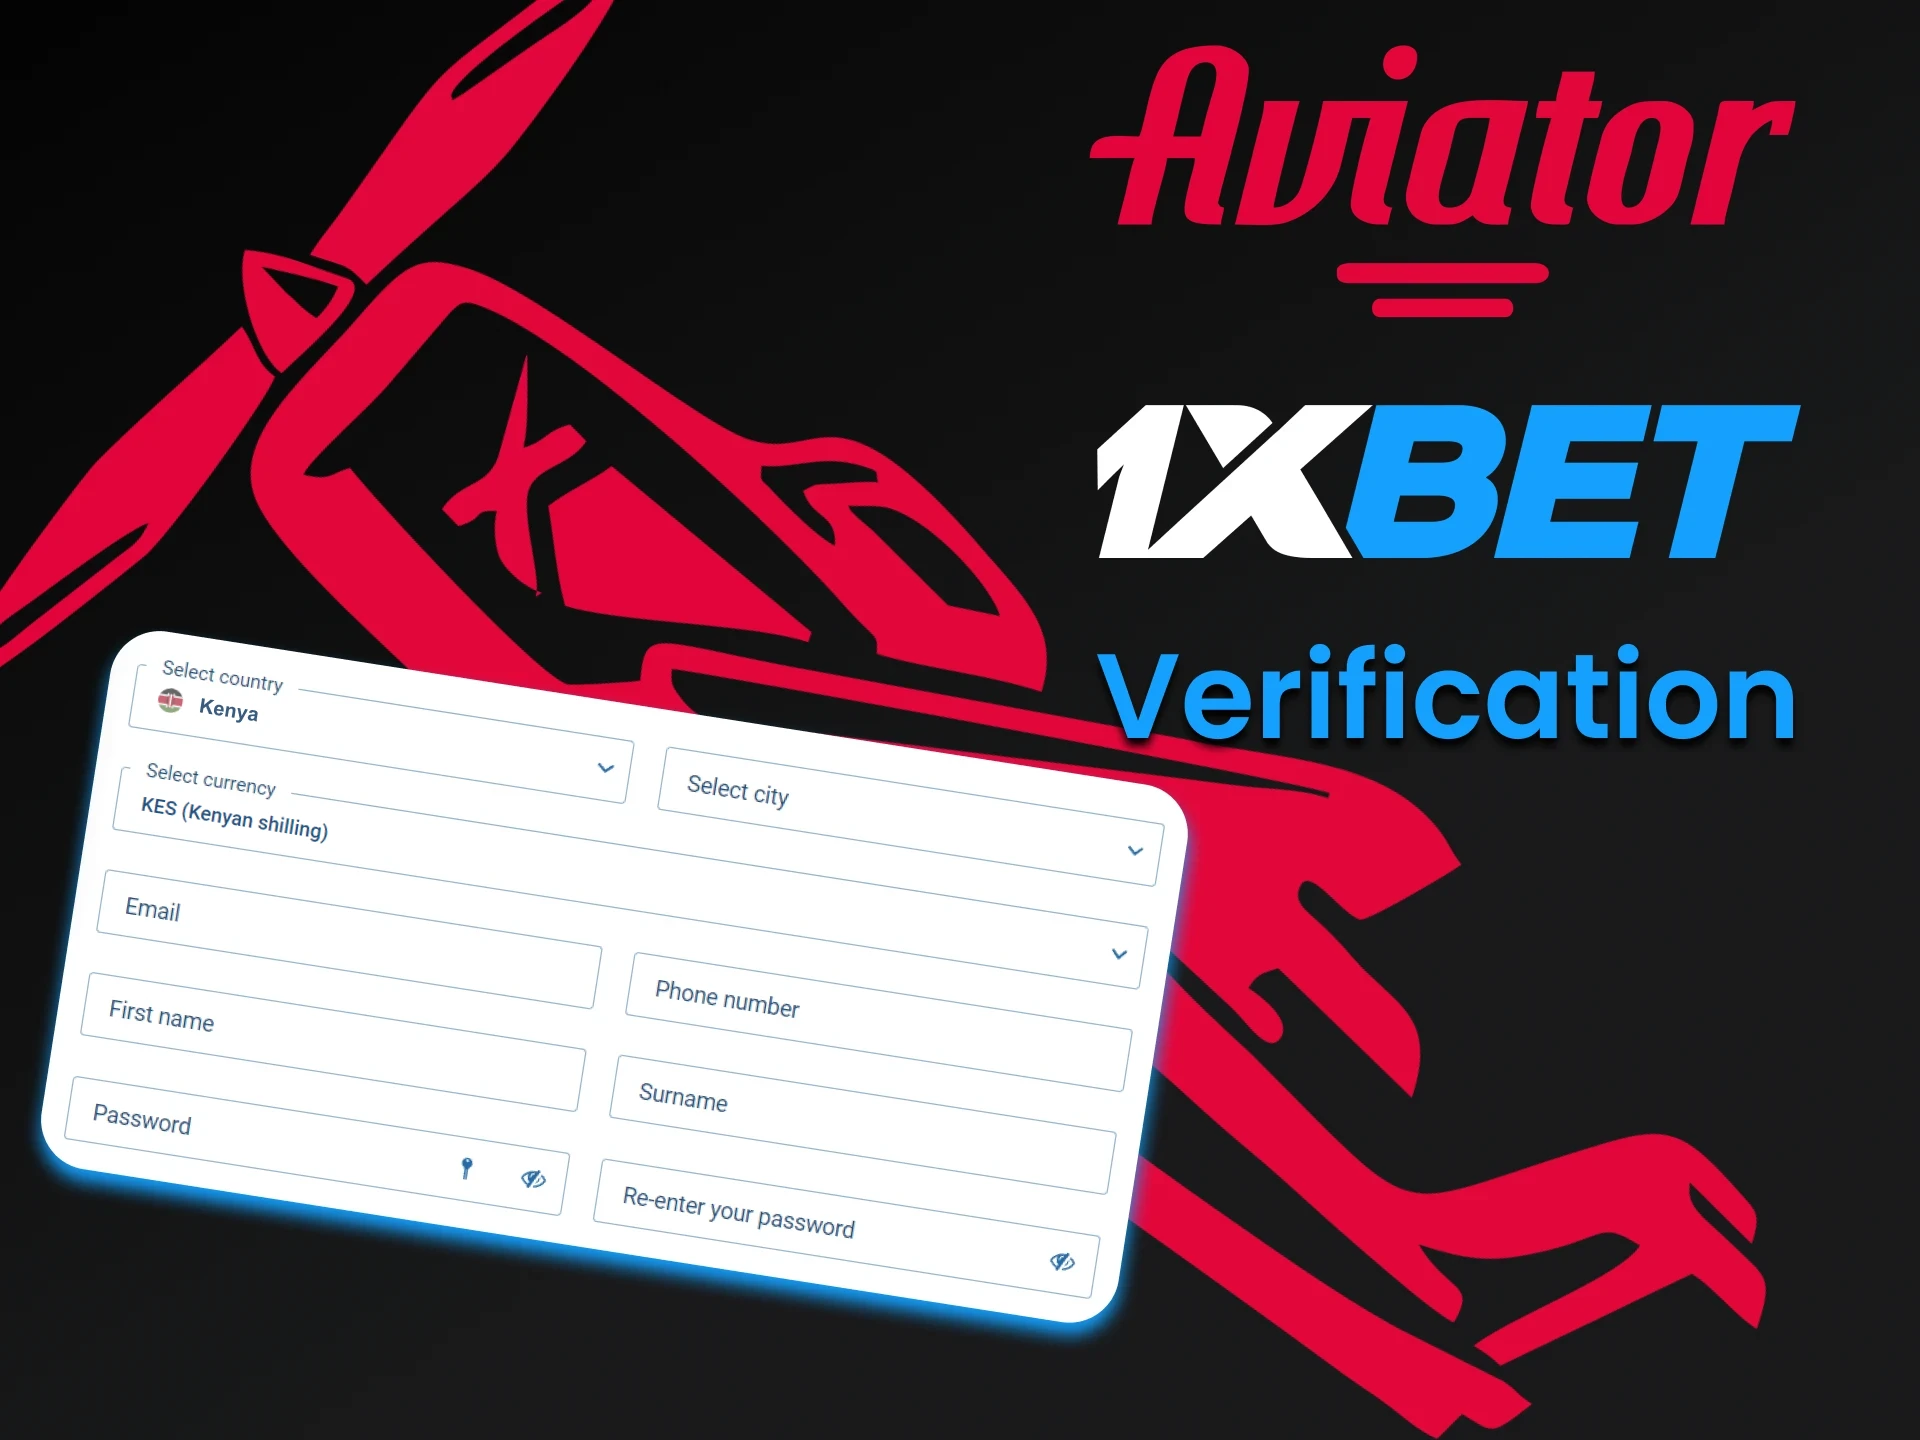 Go through verification to play Aviator on 1xbet.